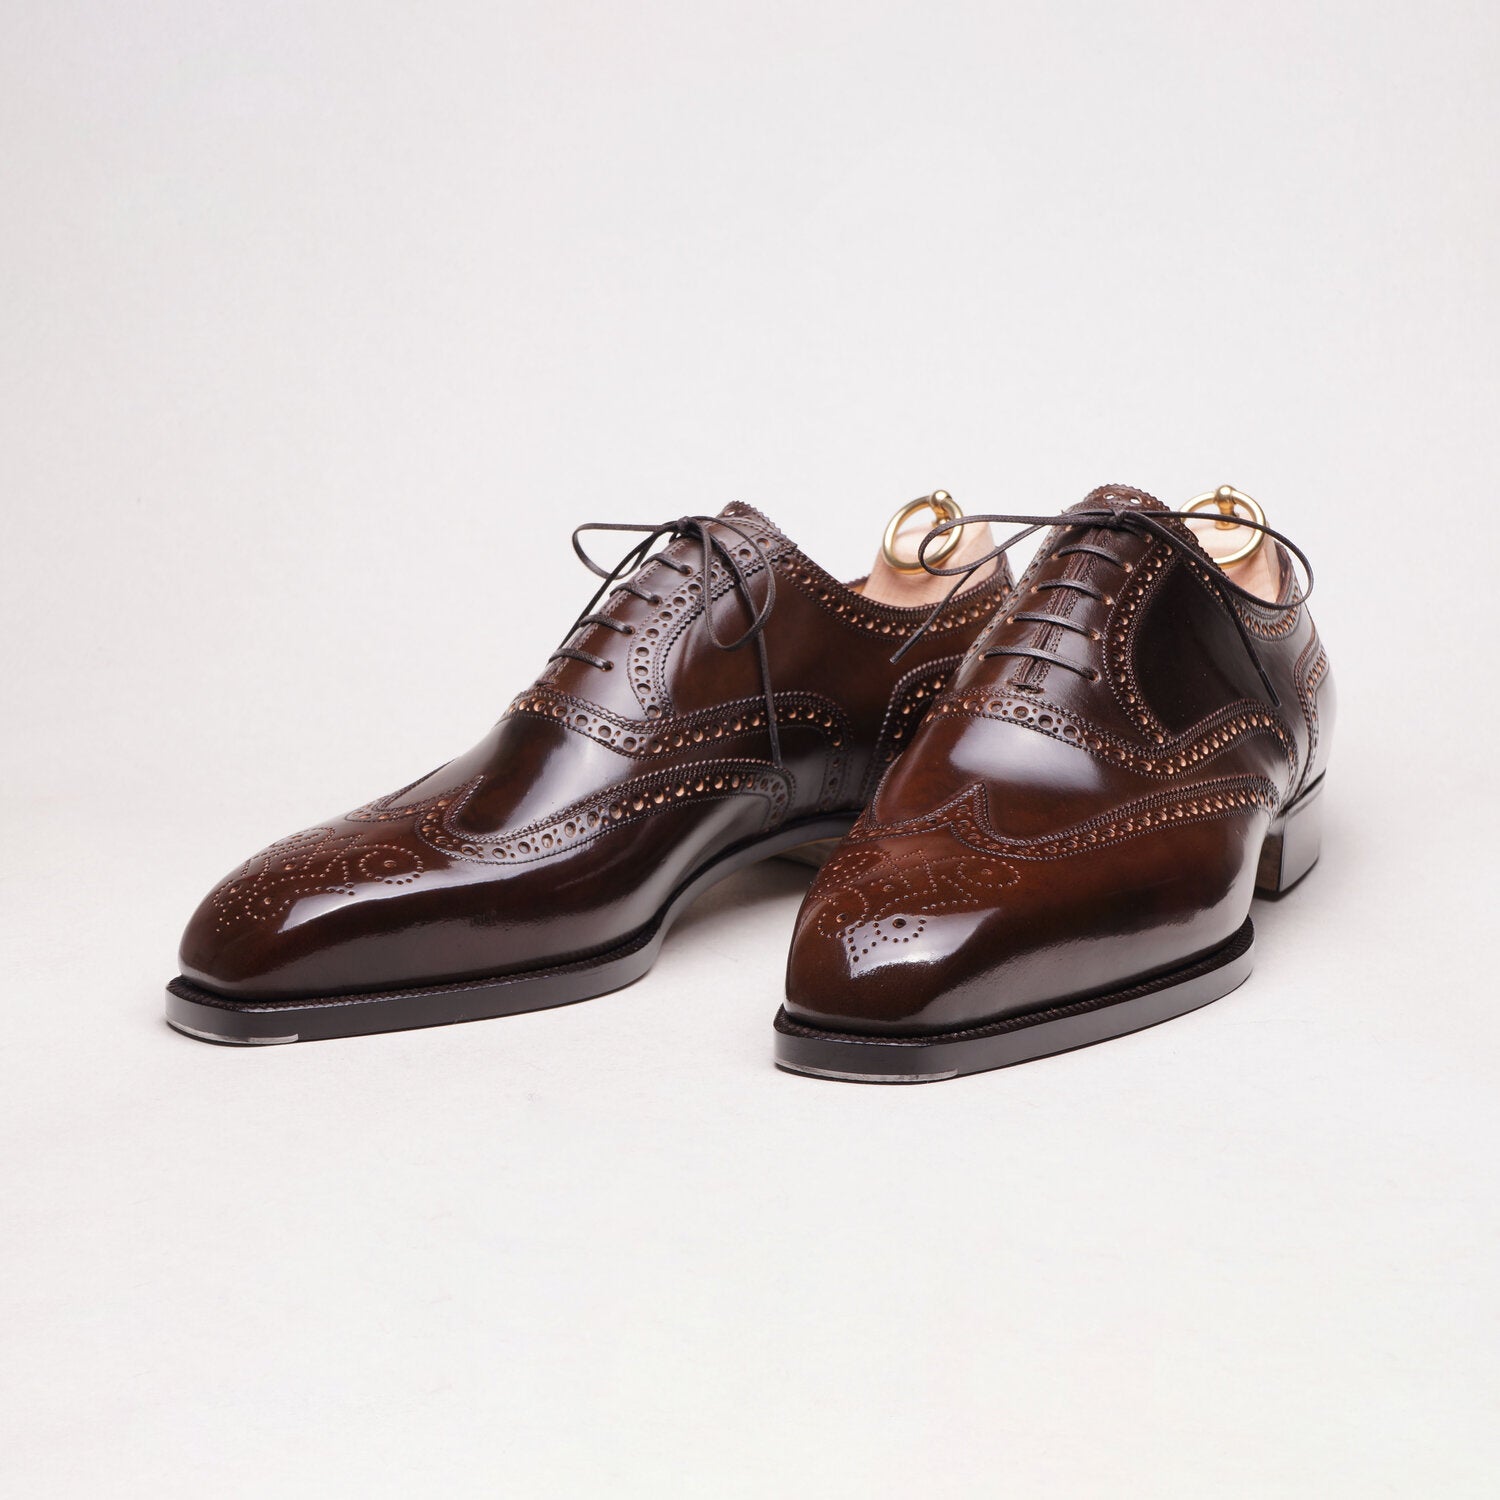 Stefano Bemer Bespoke Oxford Shoes - 1